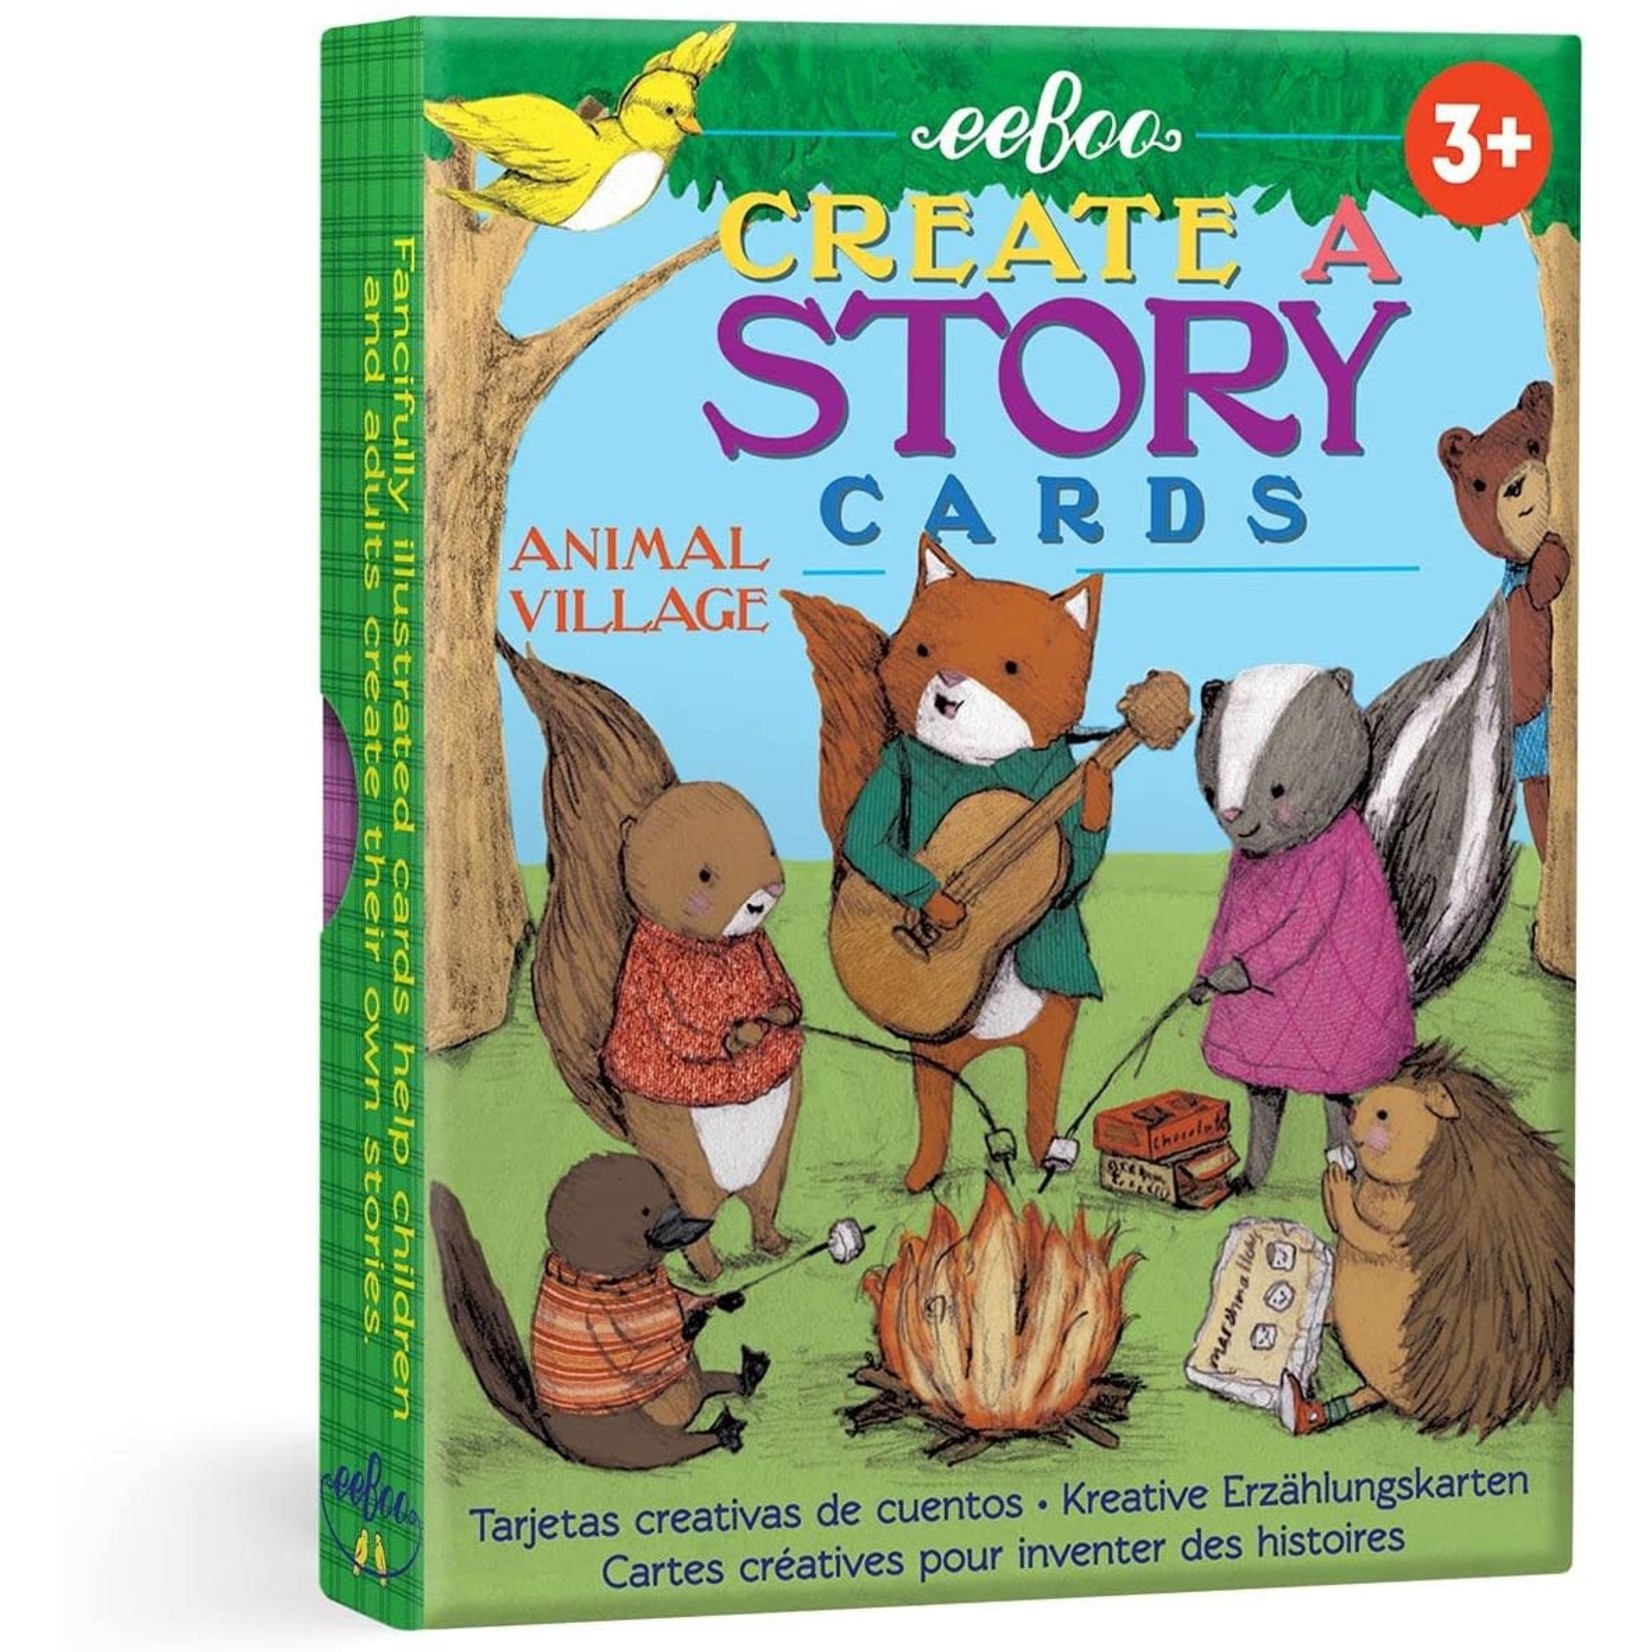 eeboo Animal Village Create a Story Cards